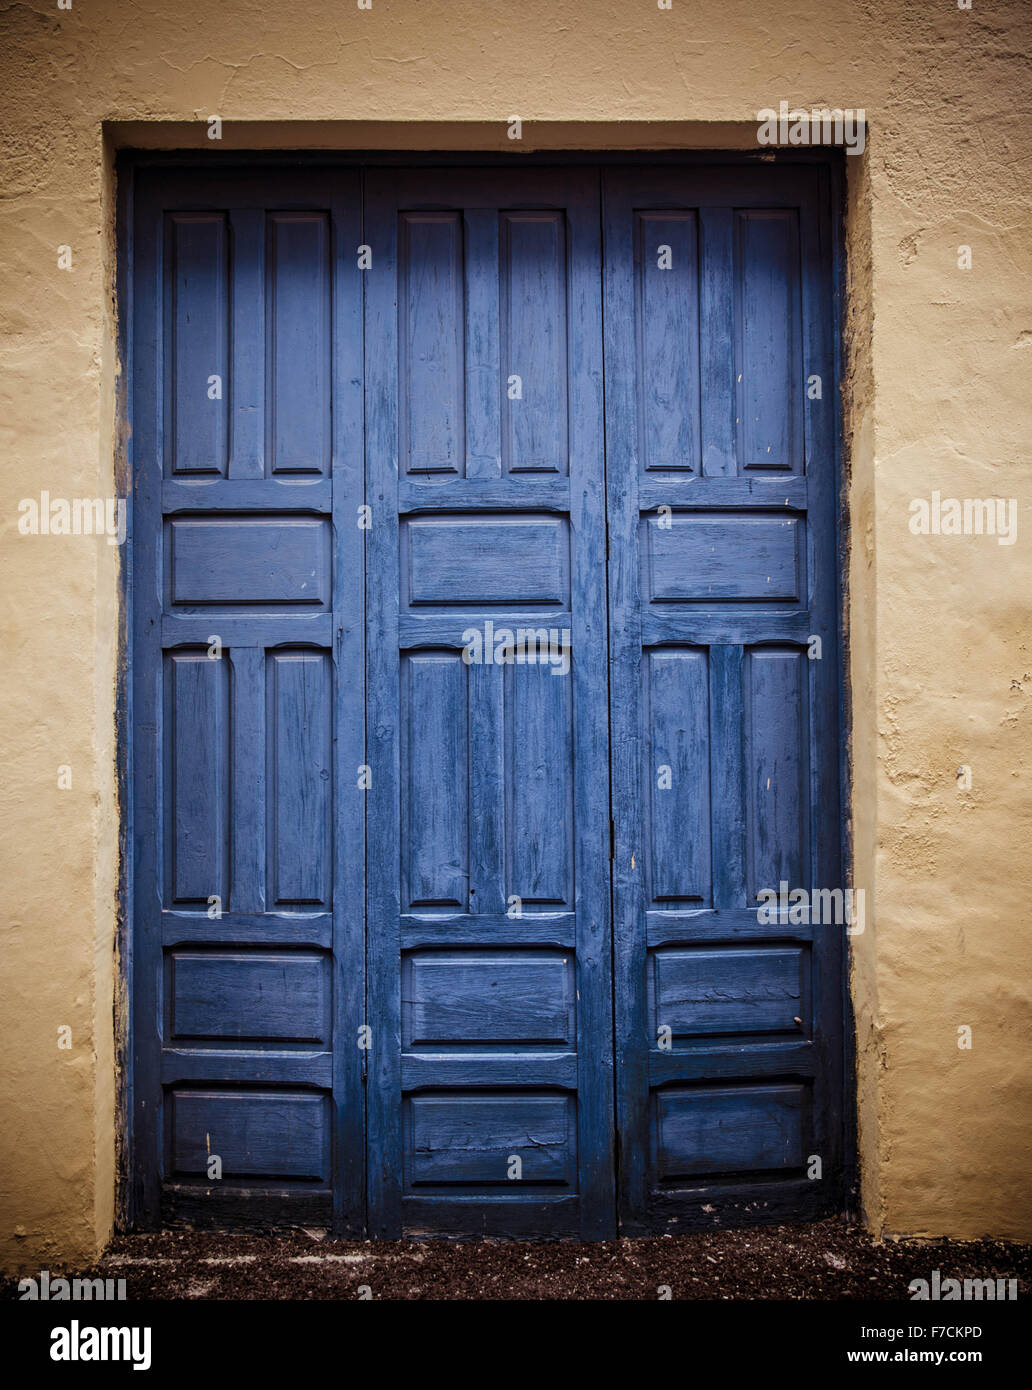 Dar querido tuyo Puerta misteriosa fotografías e imágenes de alta resolución - Alamy